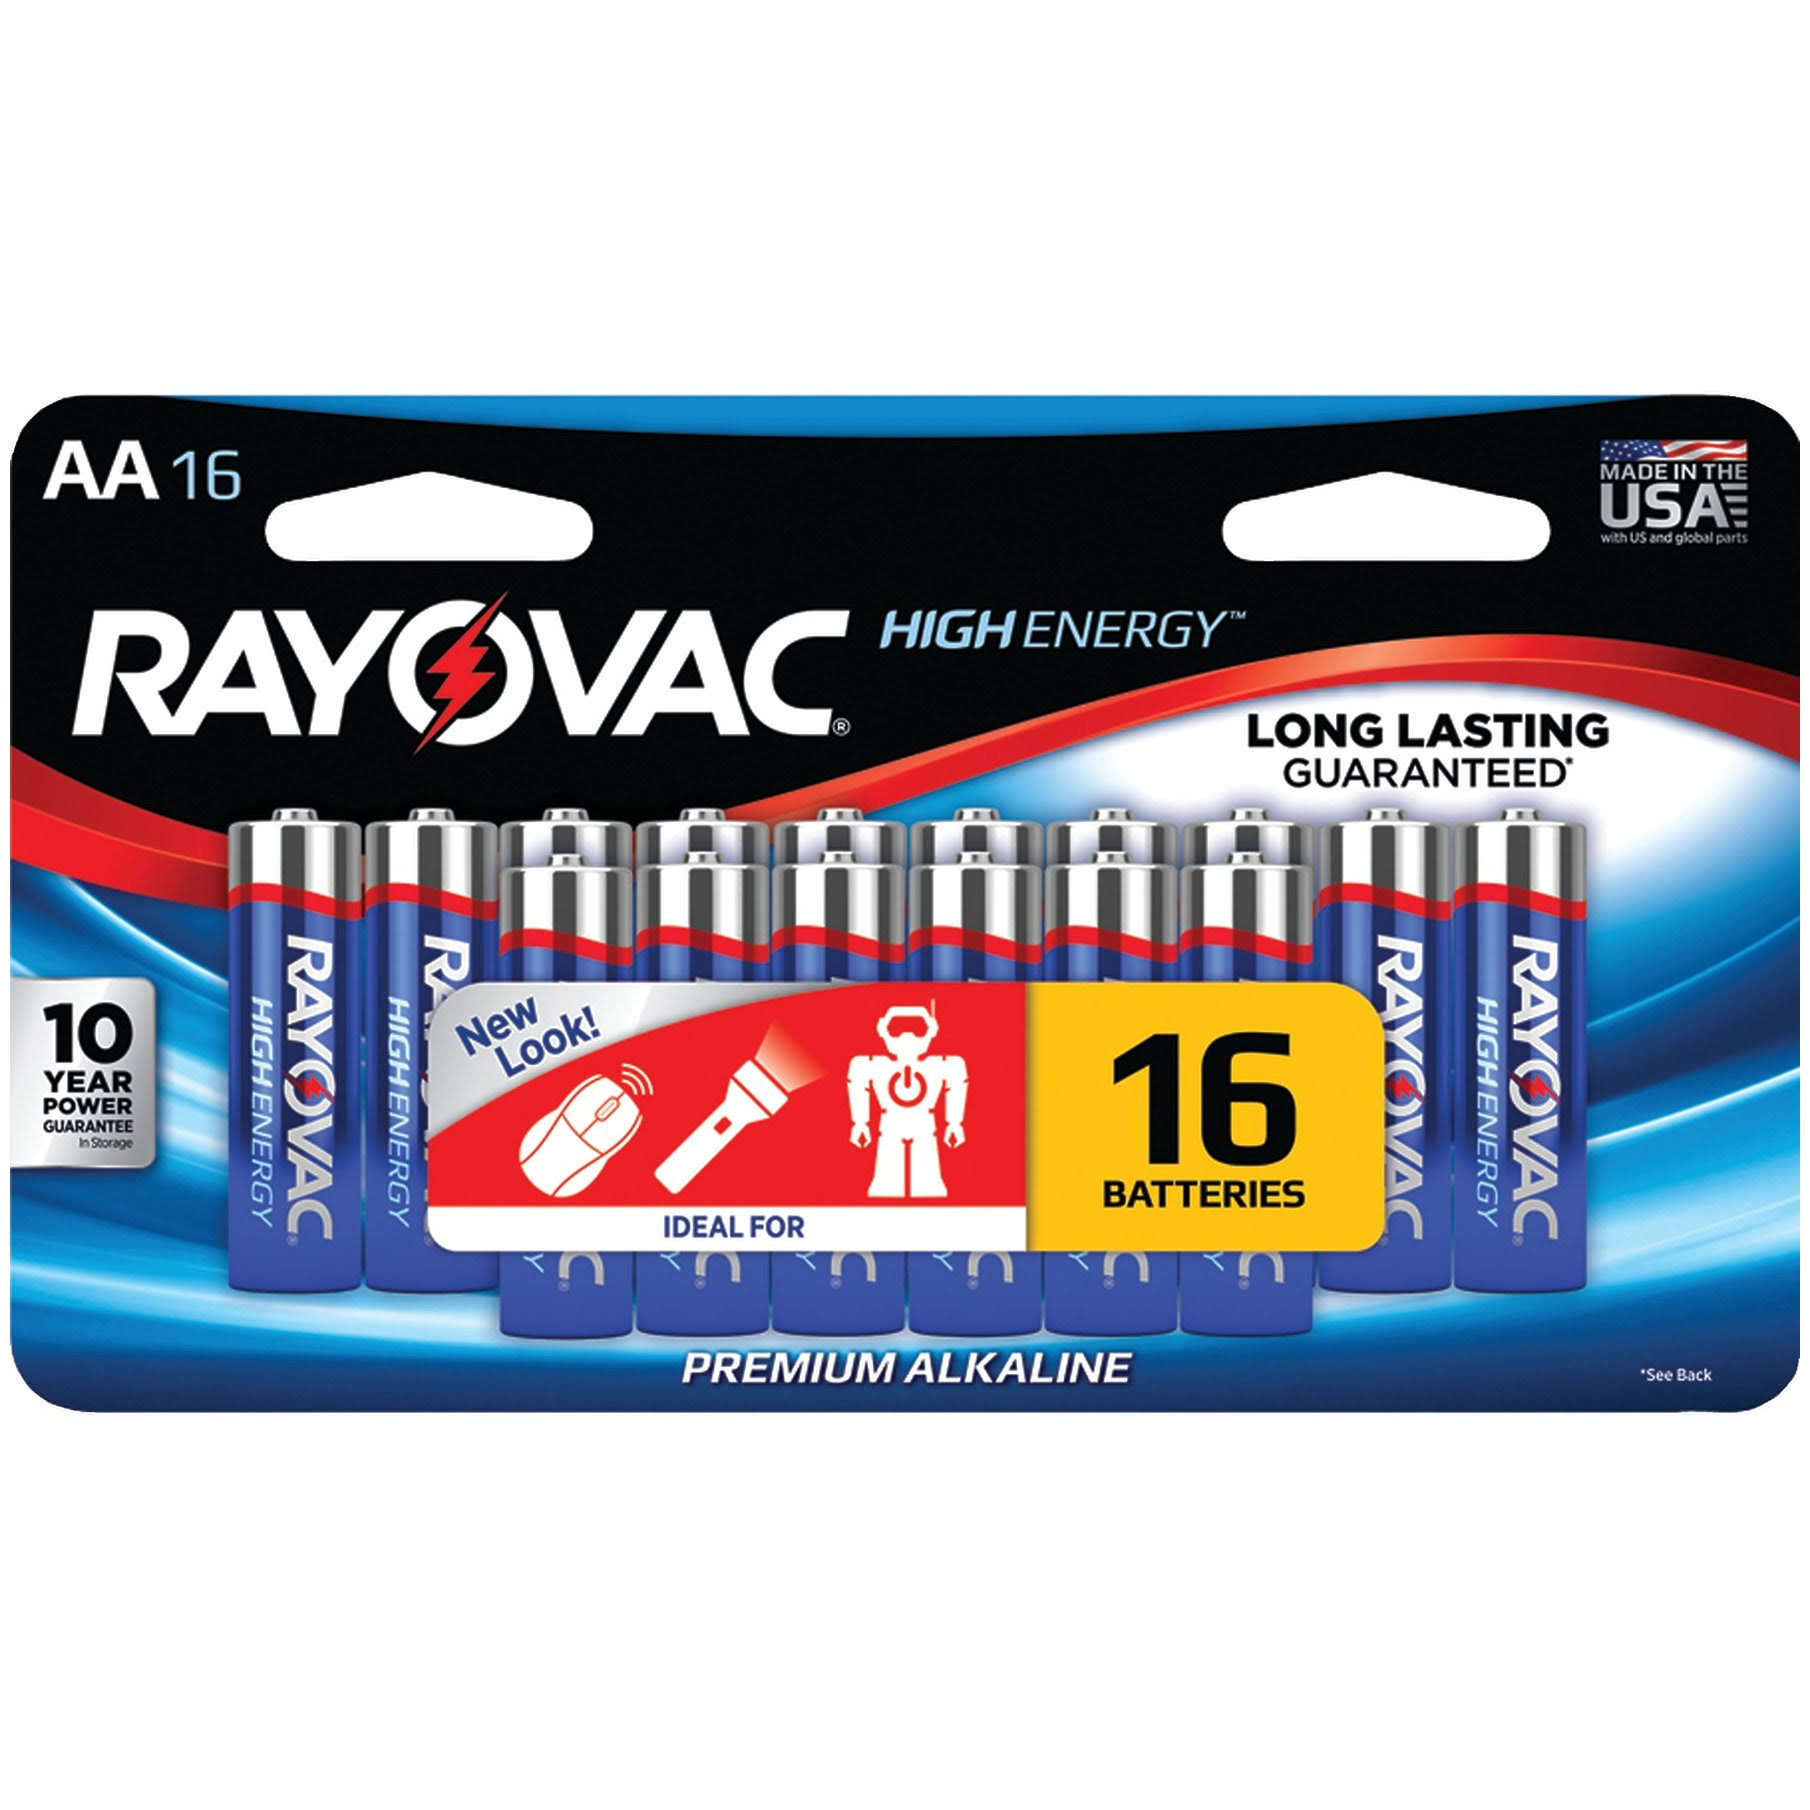 Rayovac Alkaline AA Batteries - 1.5V, 16pk